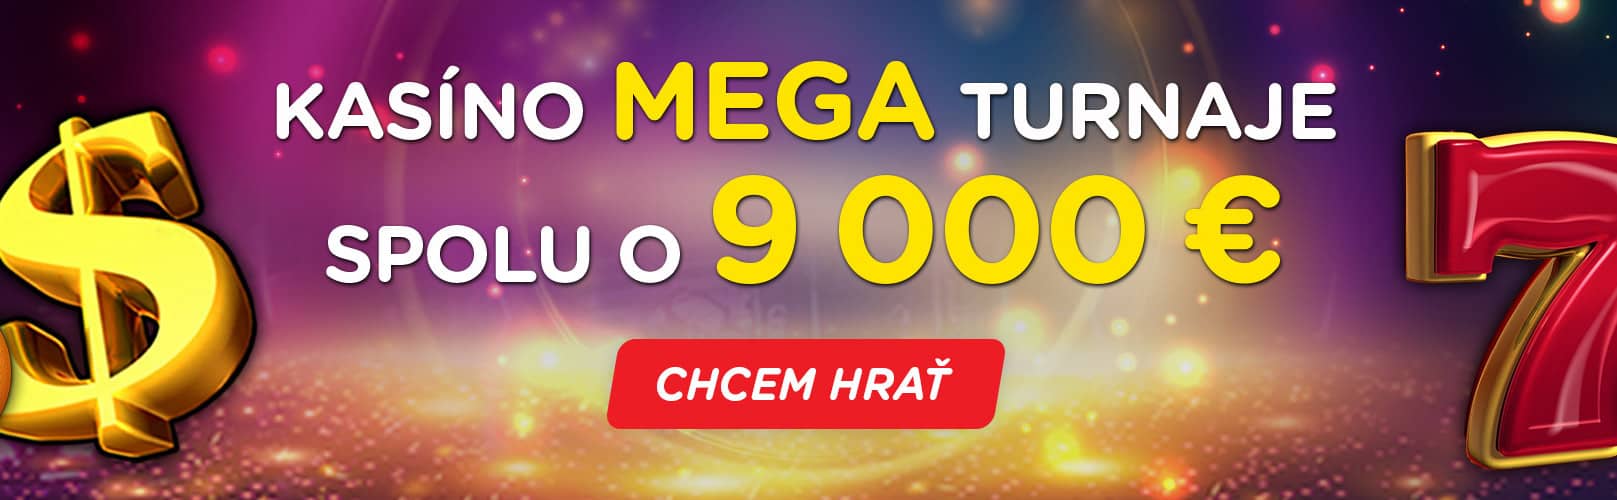 Kasíno Mega turnaje o 9000 € - eTIPOS.sk